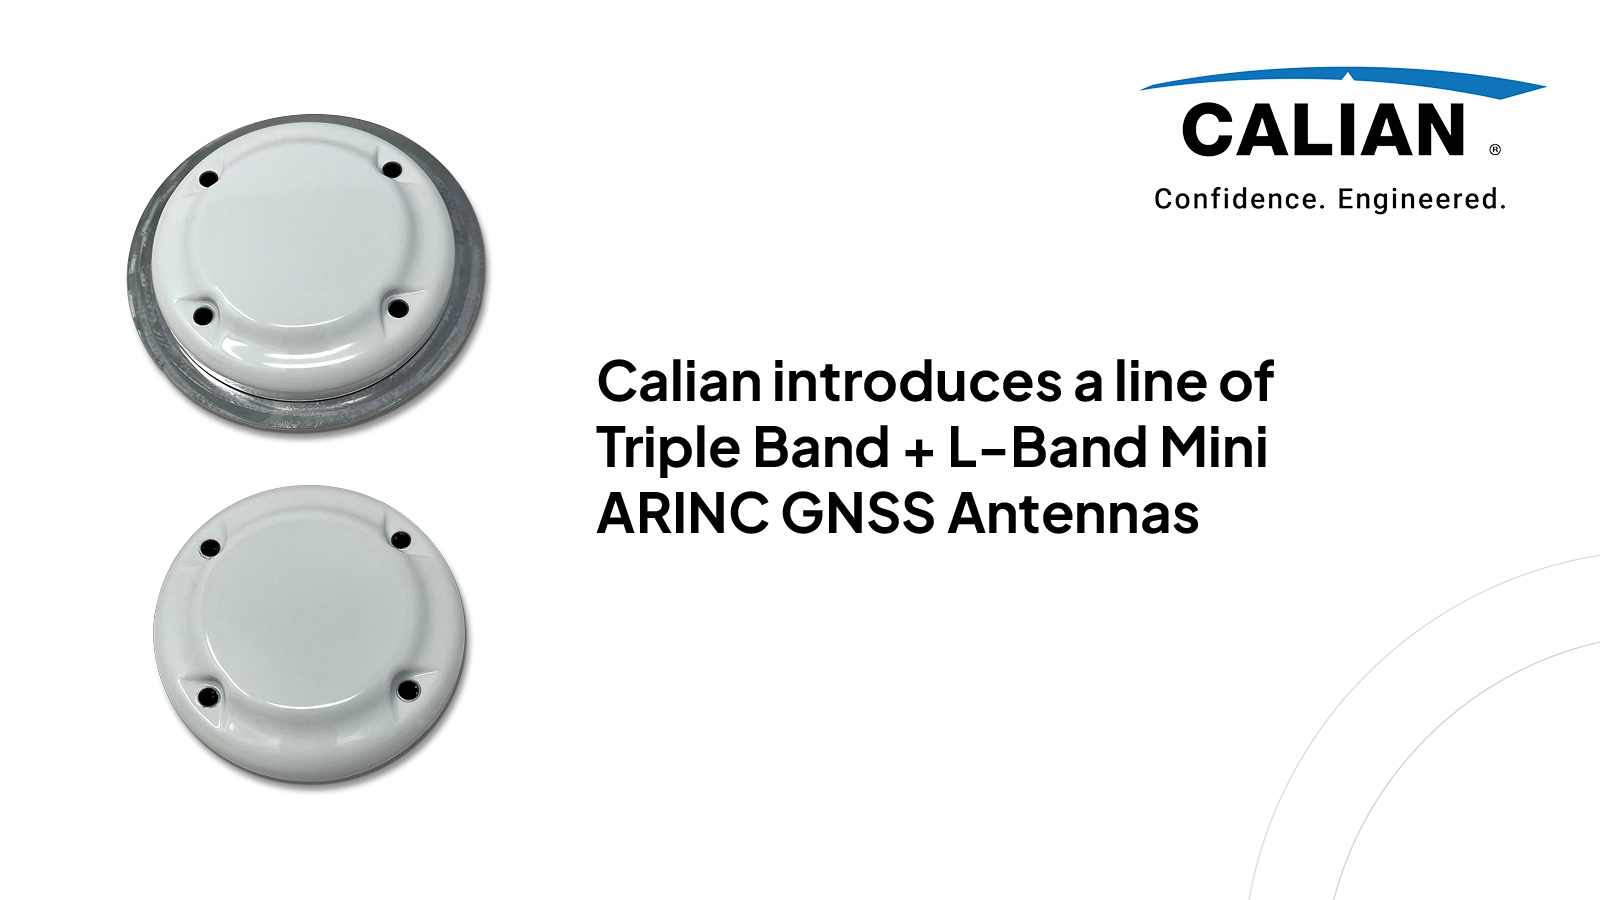 Calian introduces a line of Triple Band + L-Band Mini ARINC GNSS Antennas